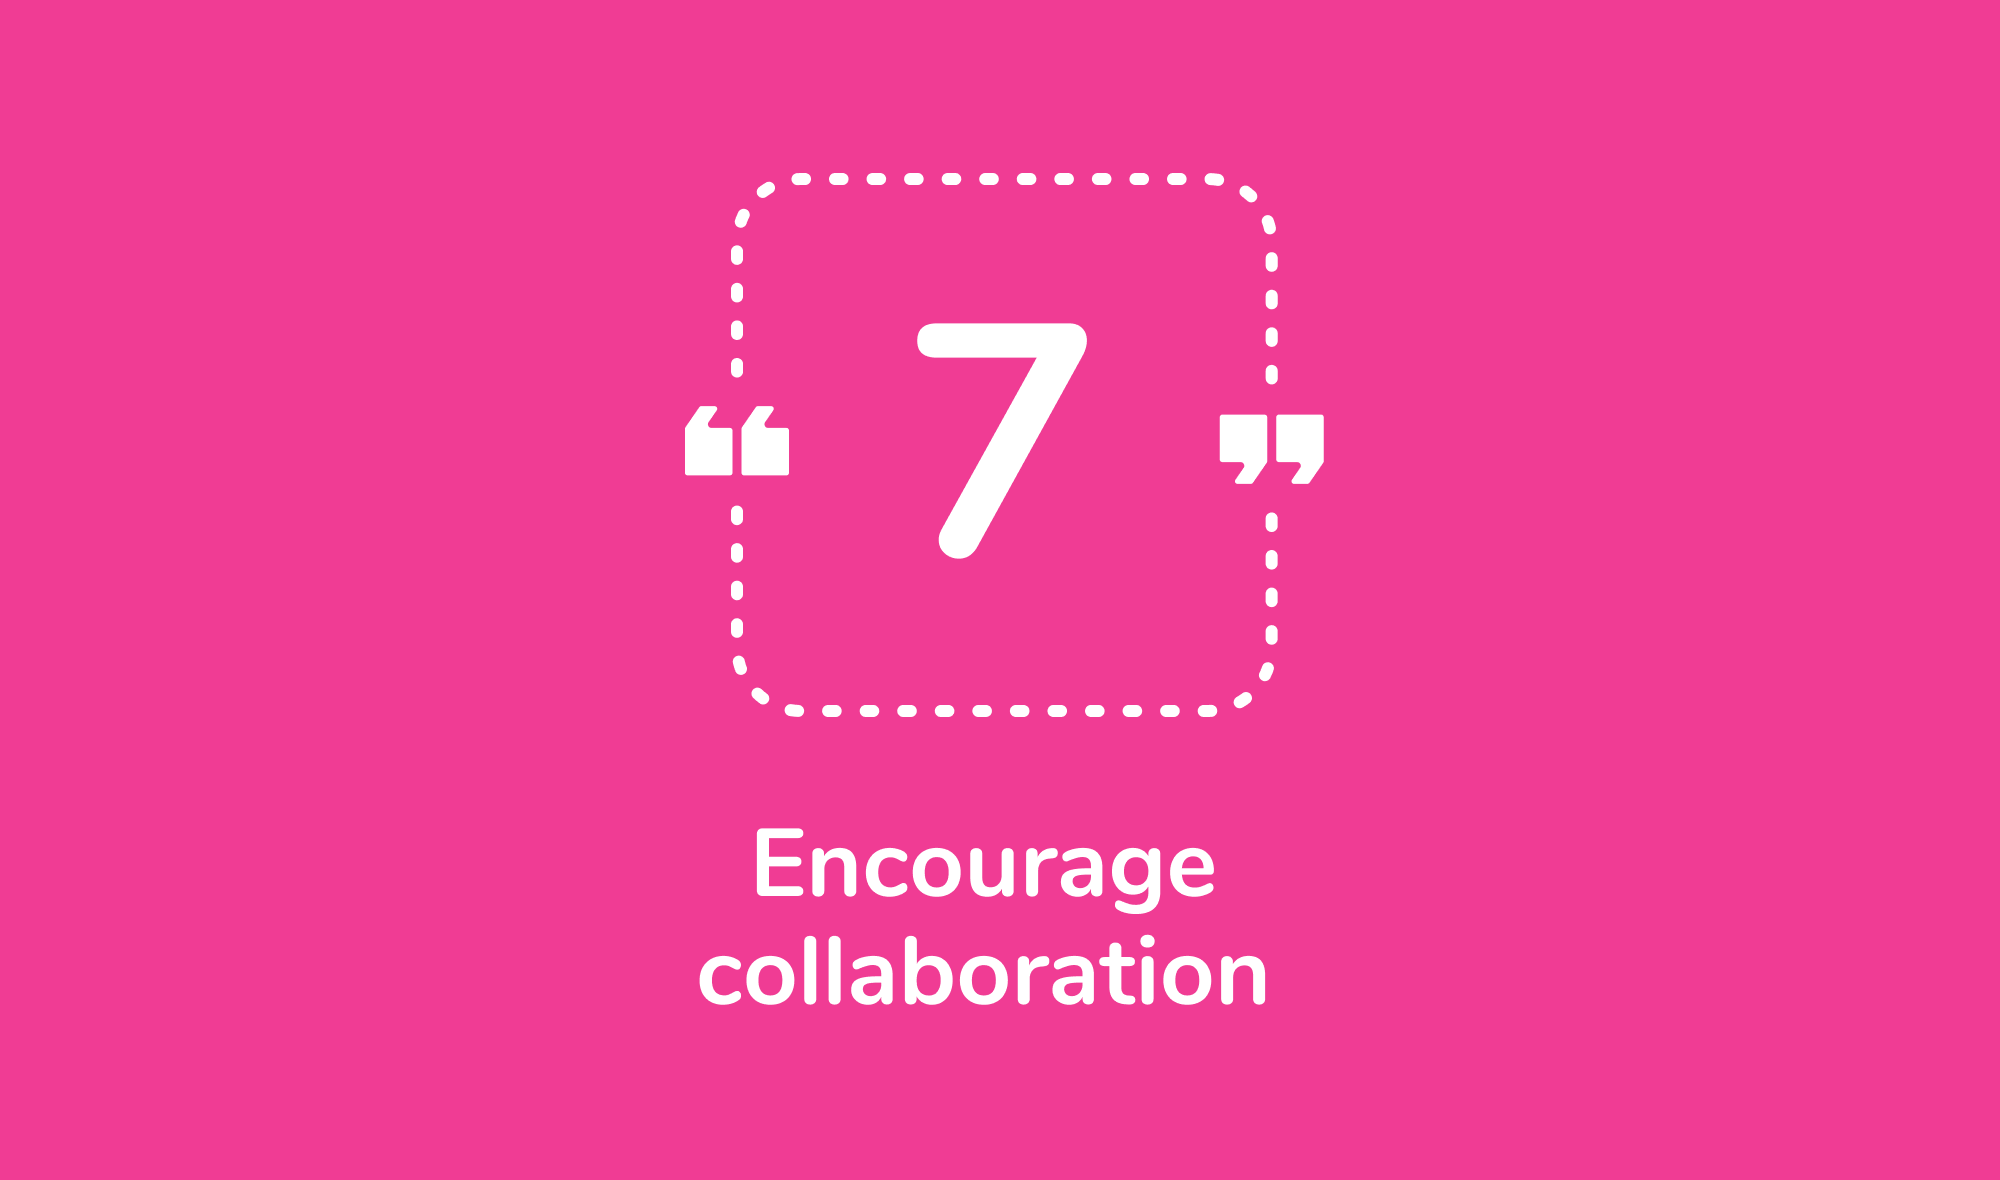 7. Encourage collaboration